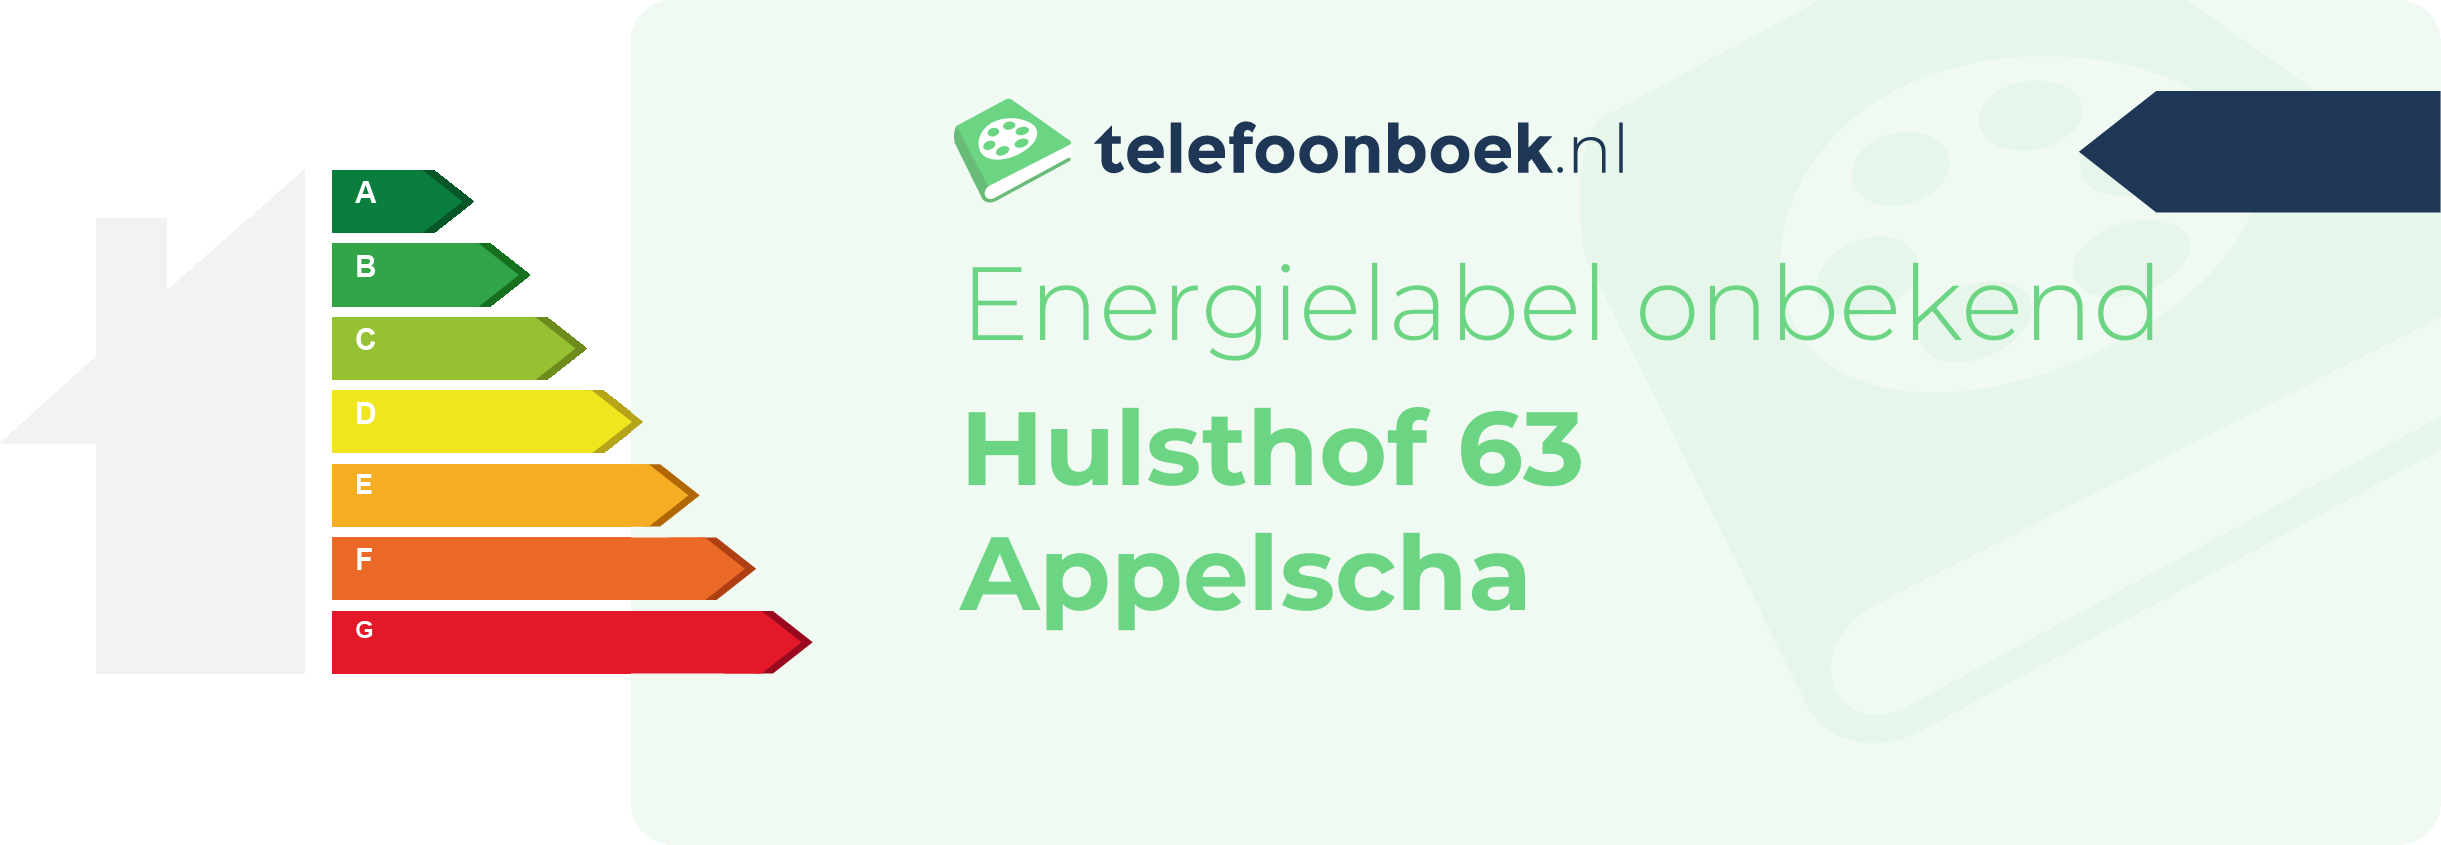 Energielabel Hulsthof 63 Appelscha